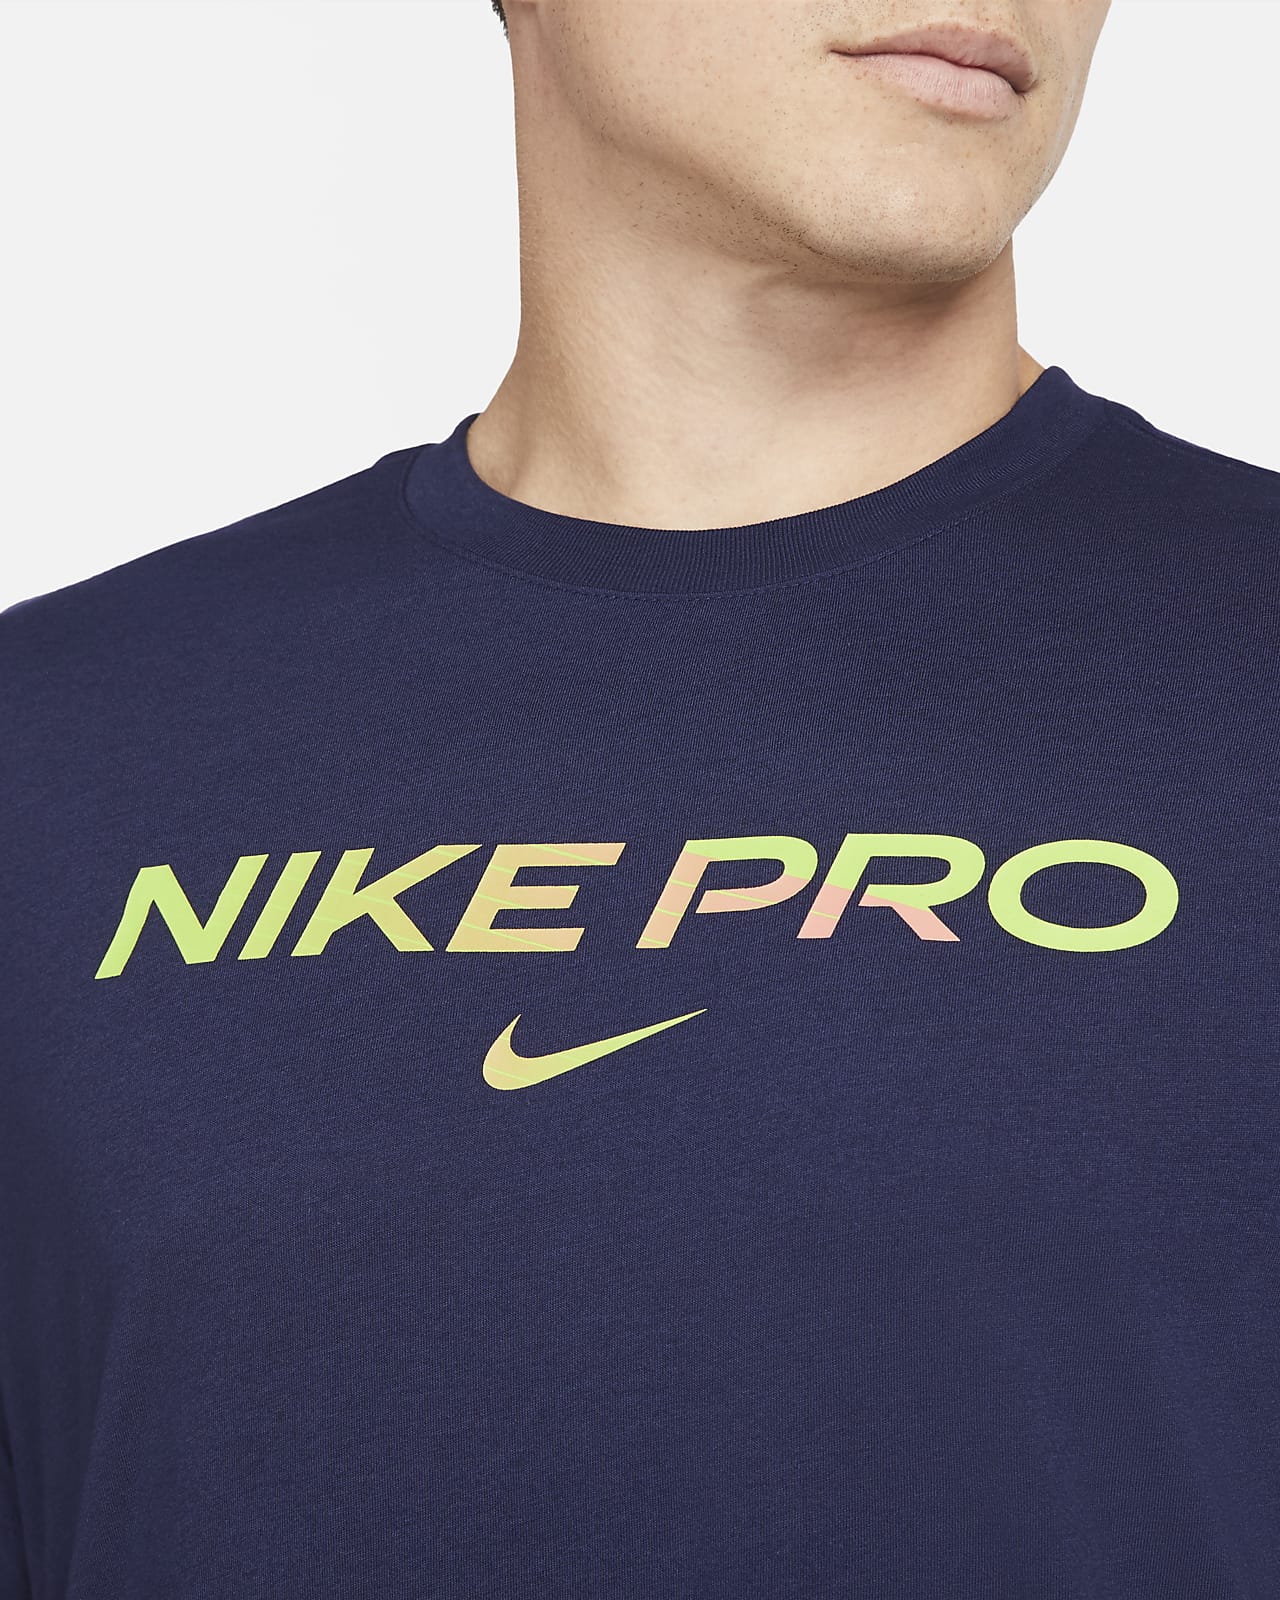 Venta > nike t shirt pro > en stock